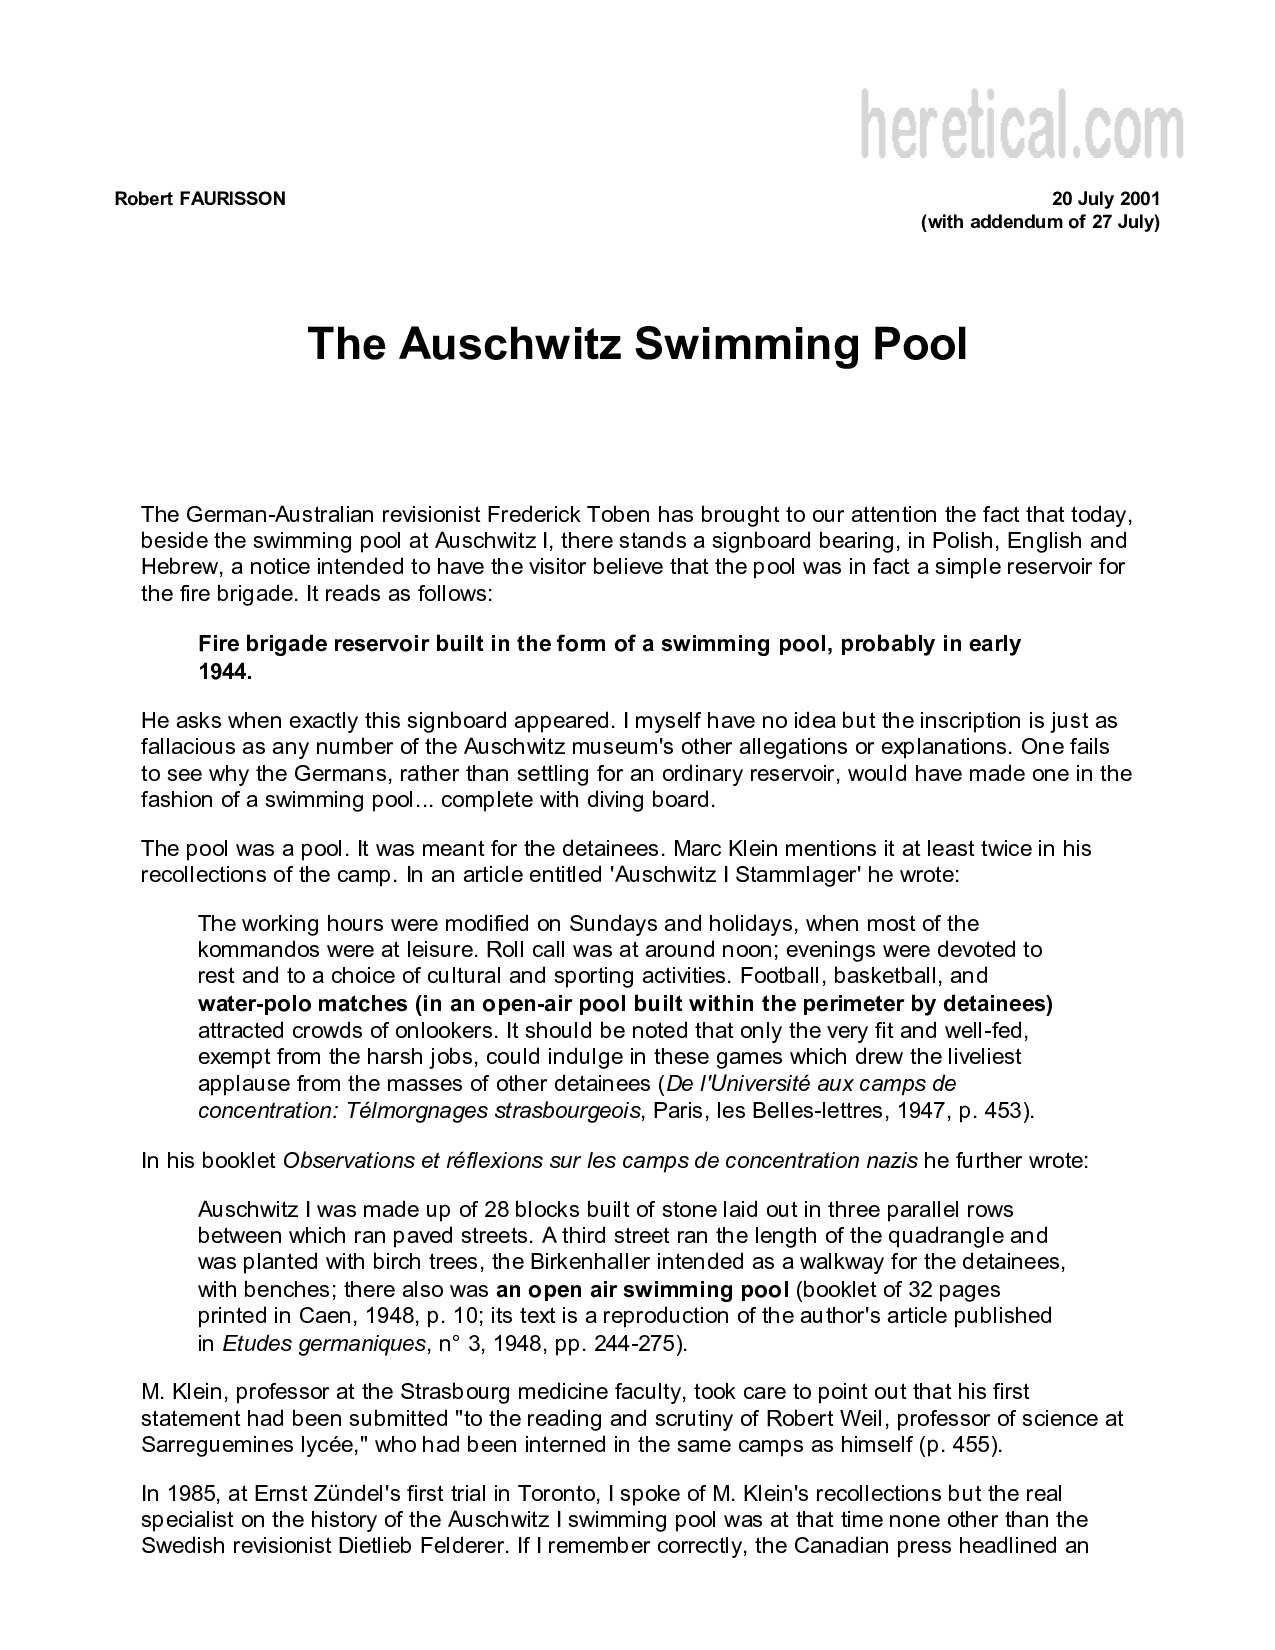 The Auschwitz Swimming Pool